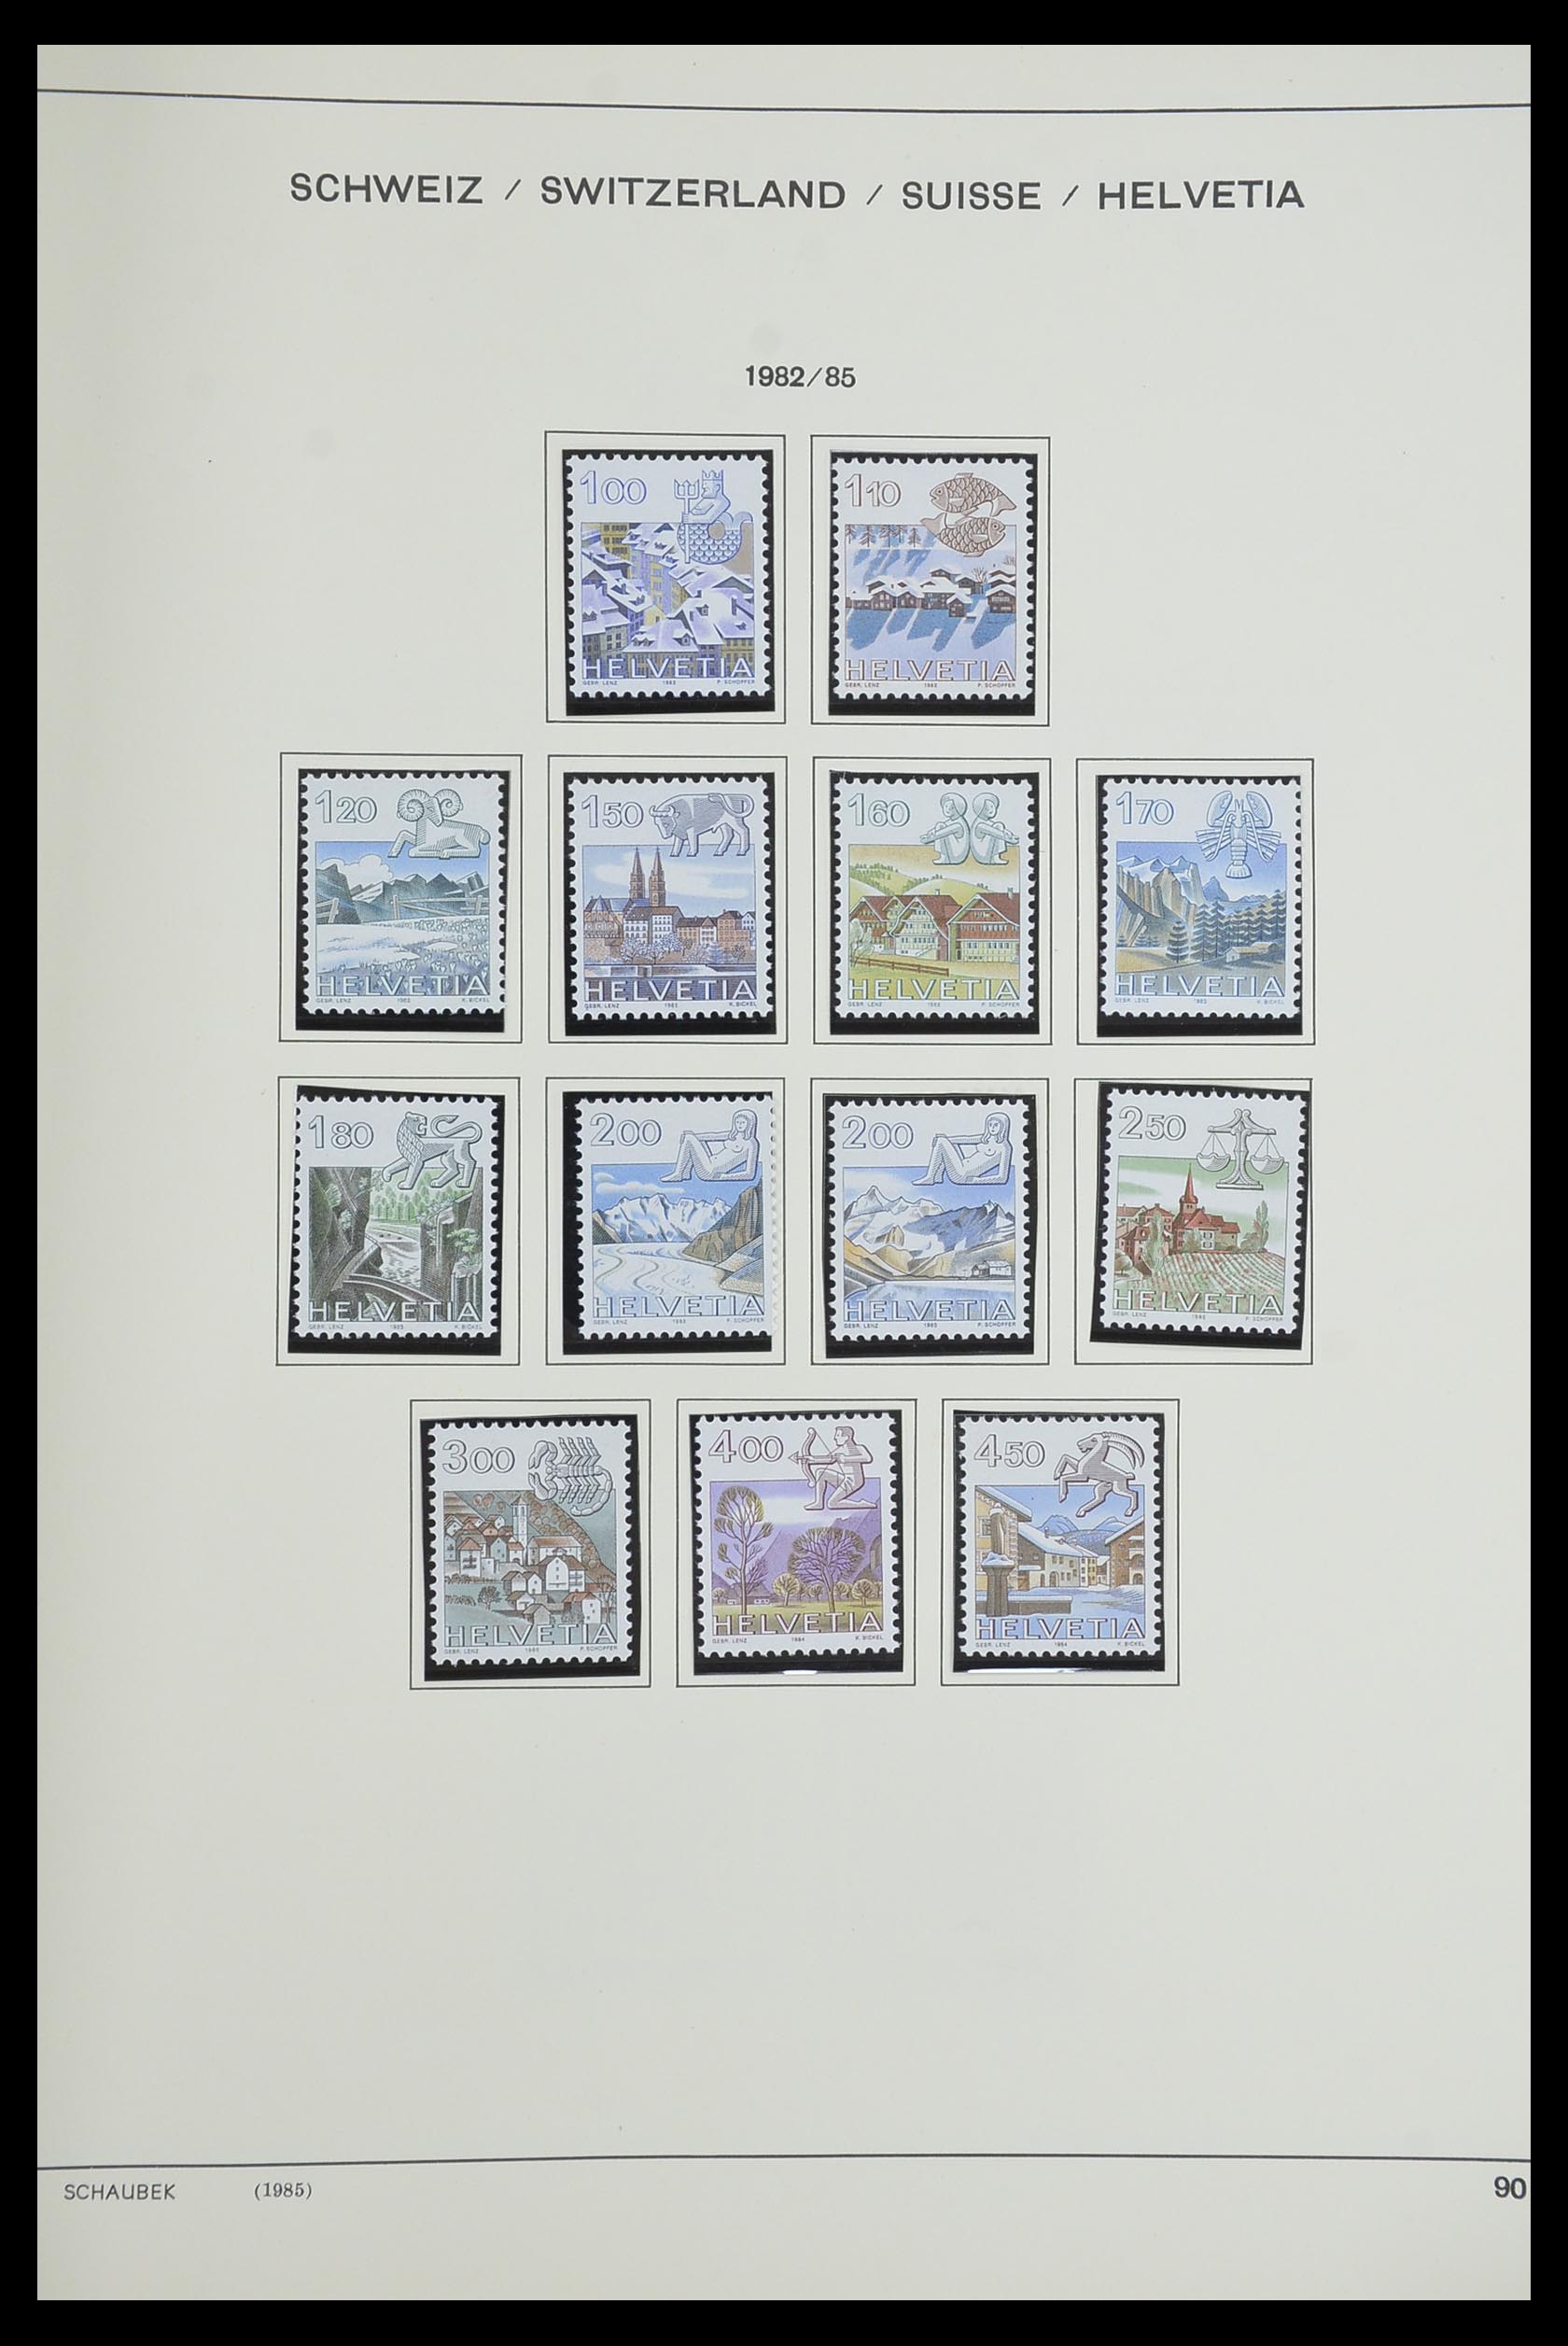 33601 080 - Stamp collection 33601 Switzerland 1854-1985.